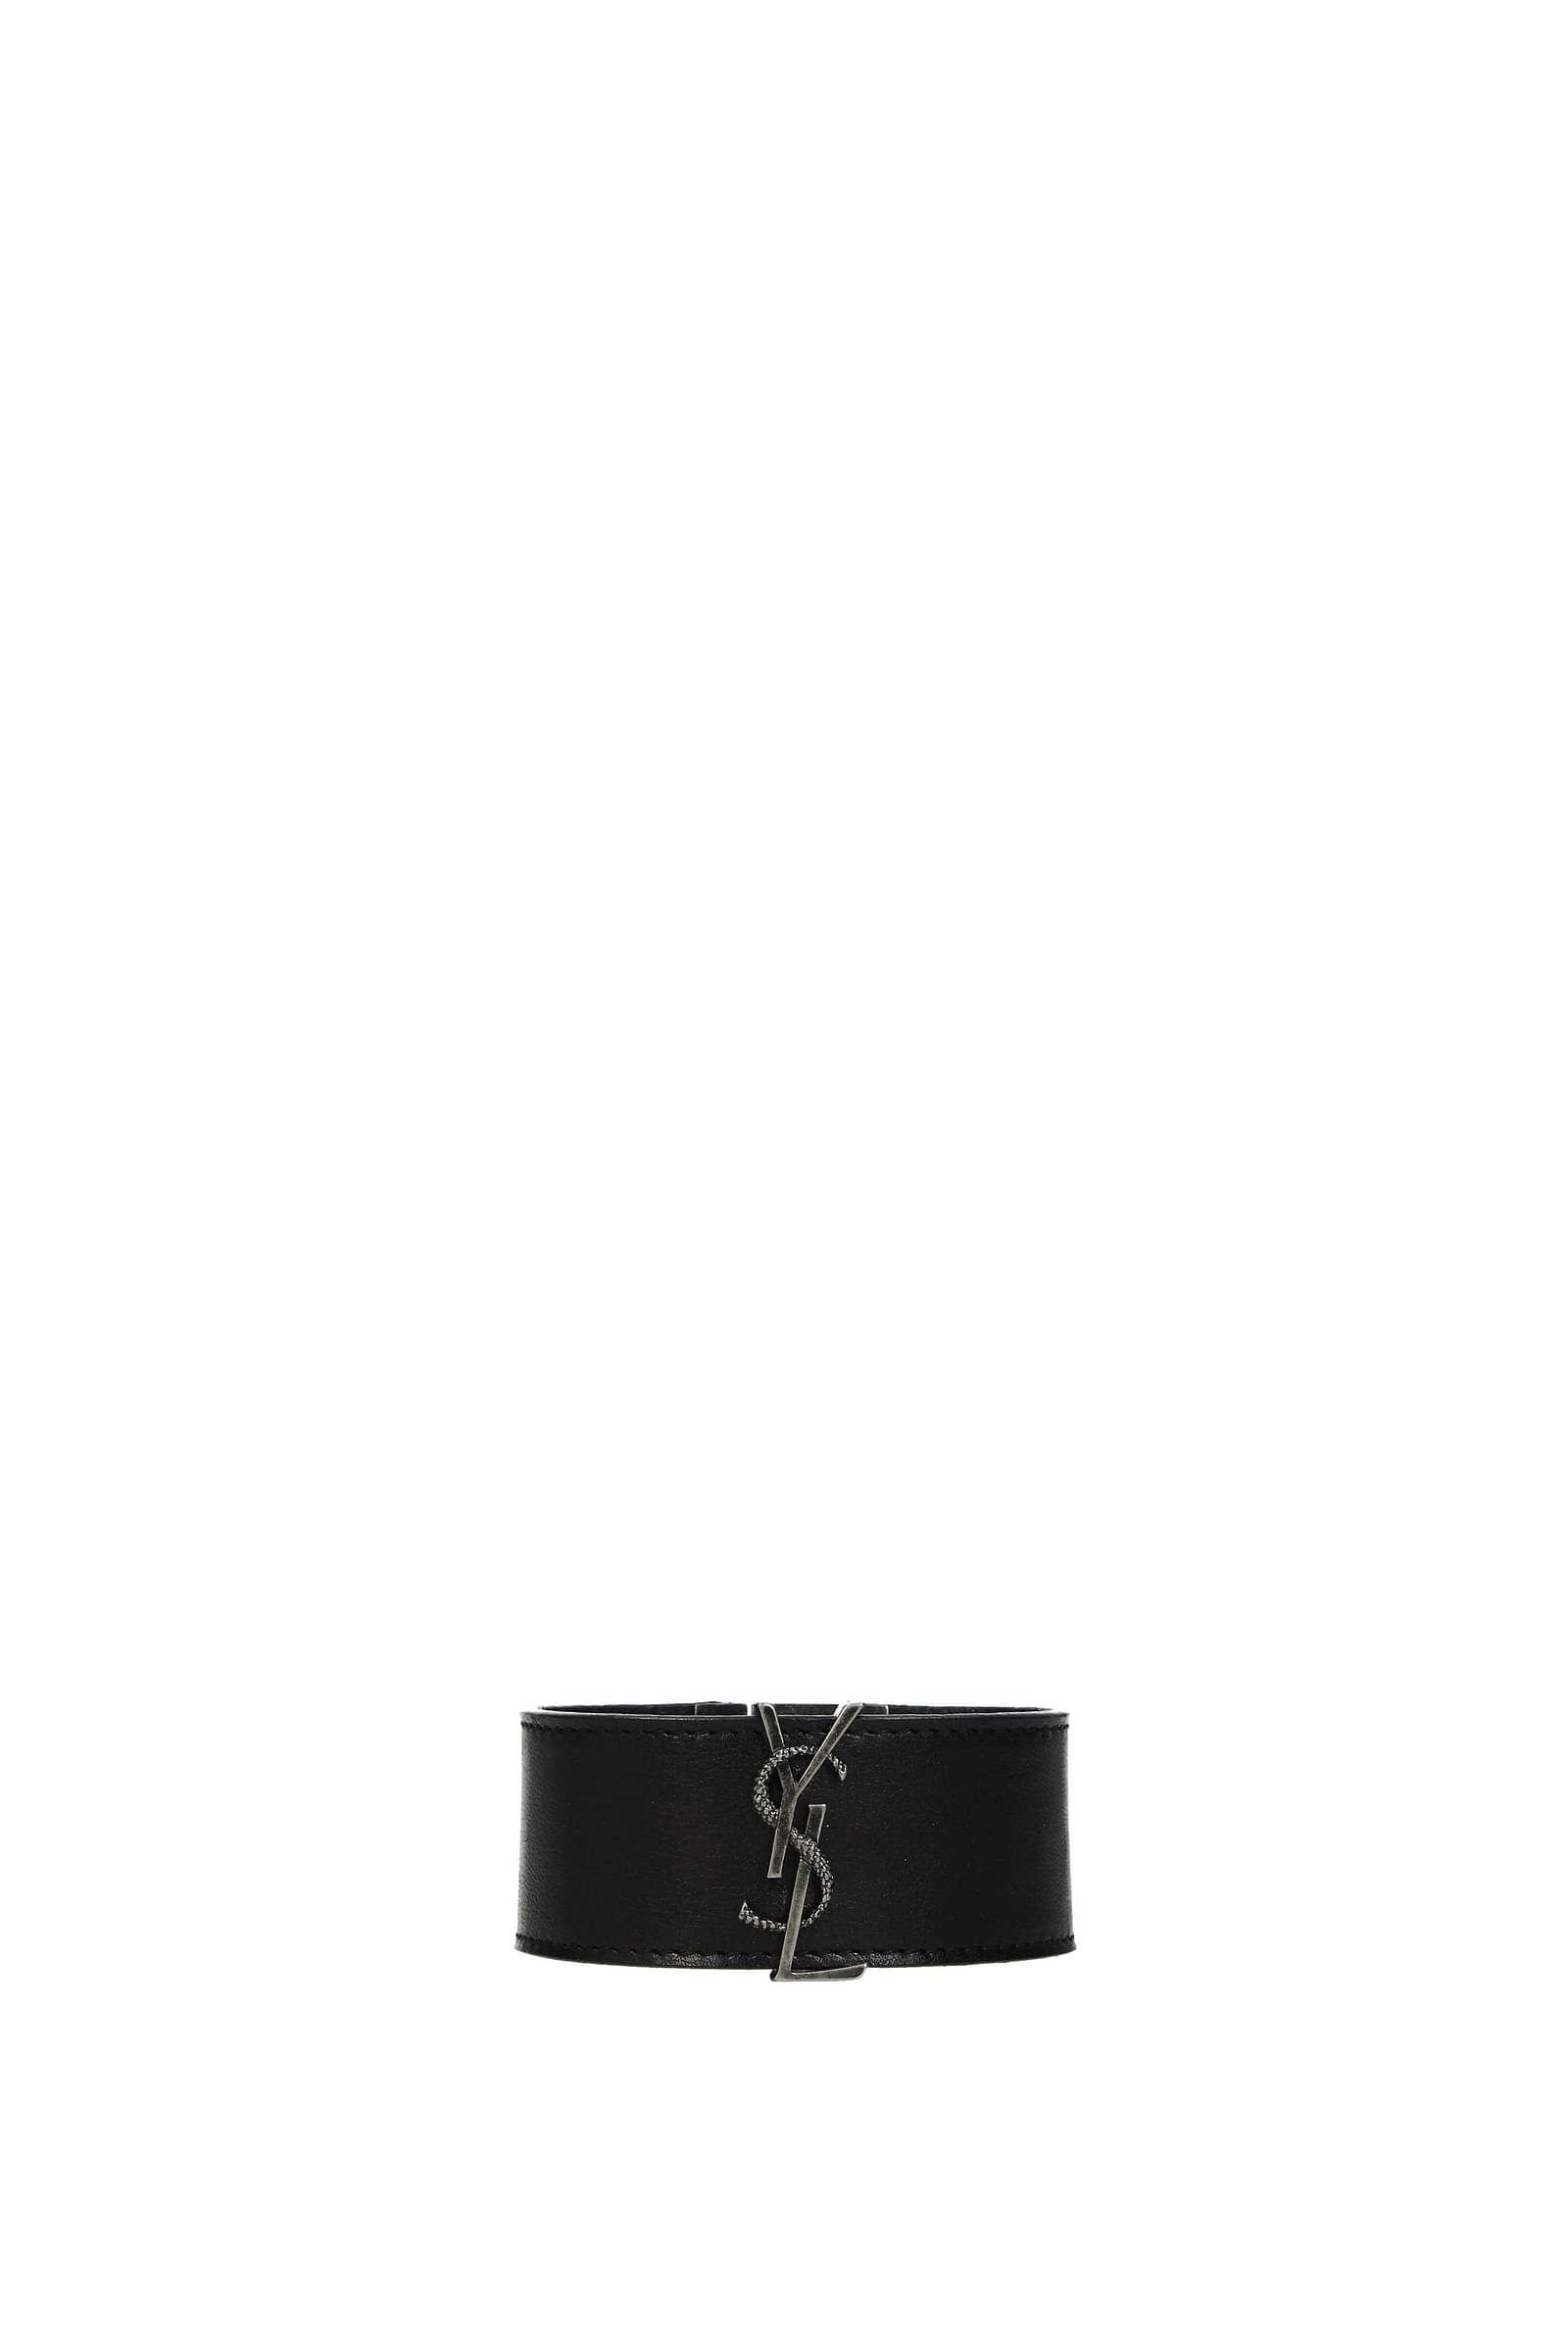 SAINT LAURENT Logo-Embellished Textured-Leather and Silver-Tone Bracelet  for Men | Silver tone, Bracelets for men, Leather bracelet